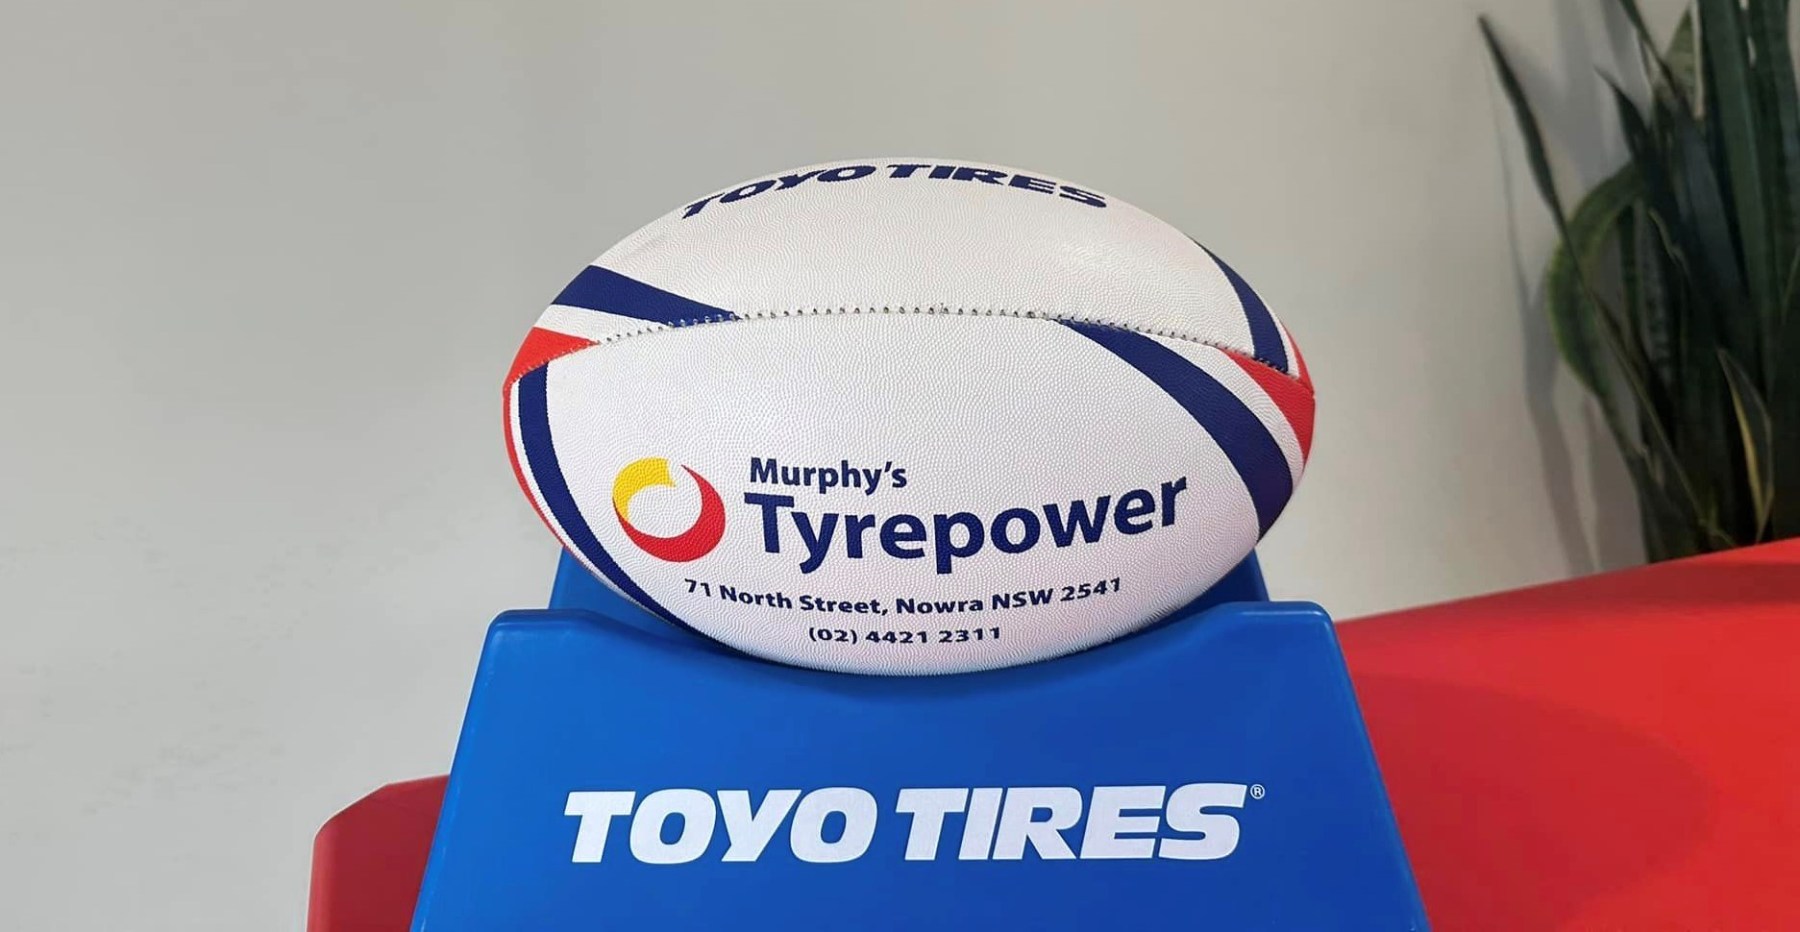 Murphy’s Tyrepower